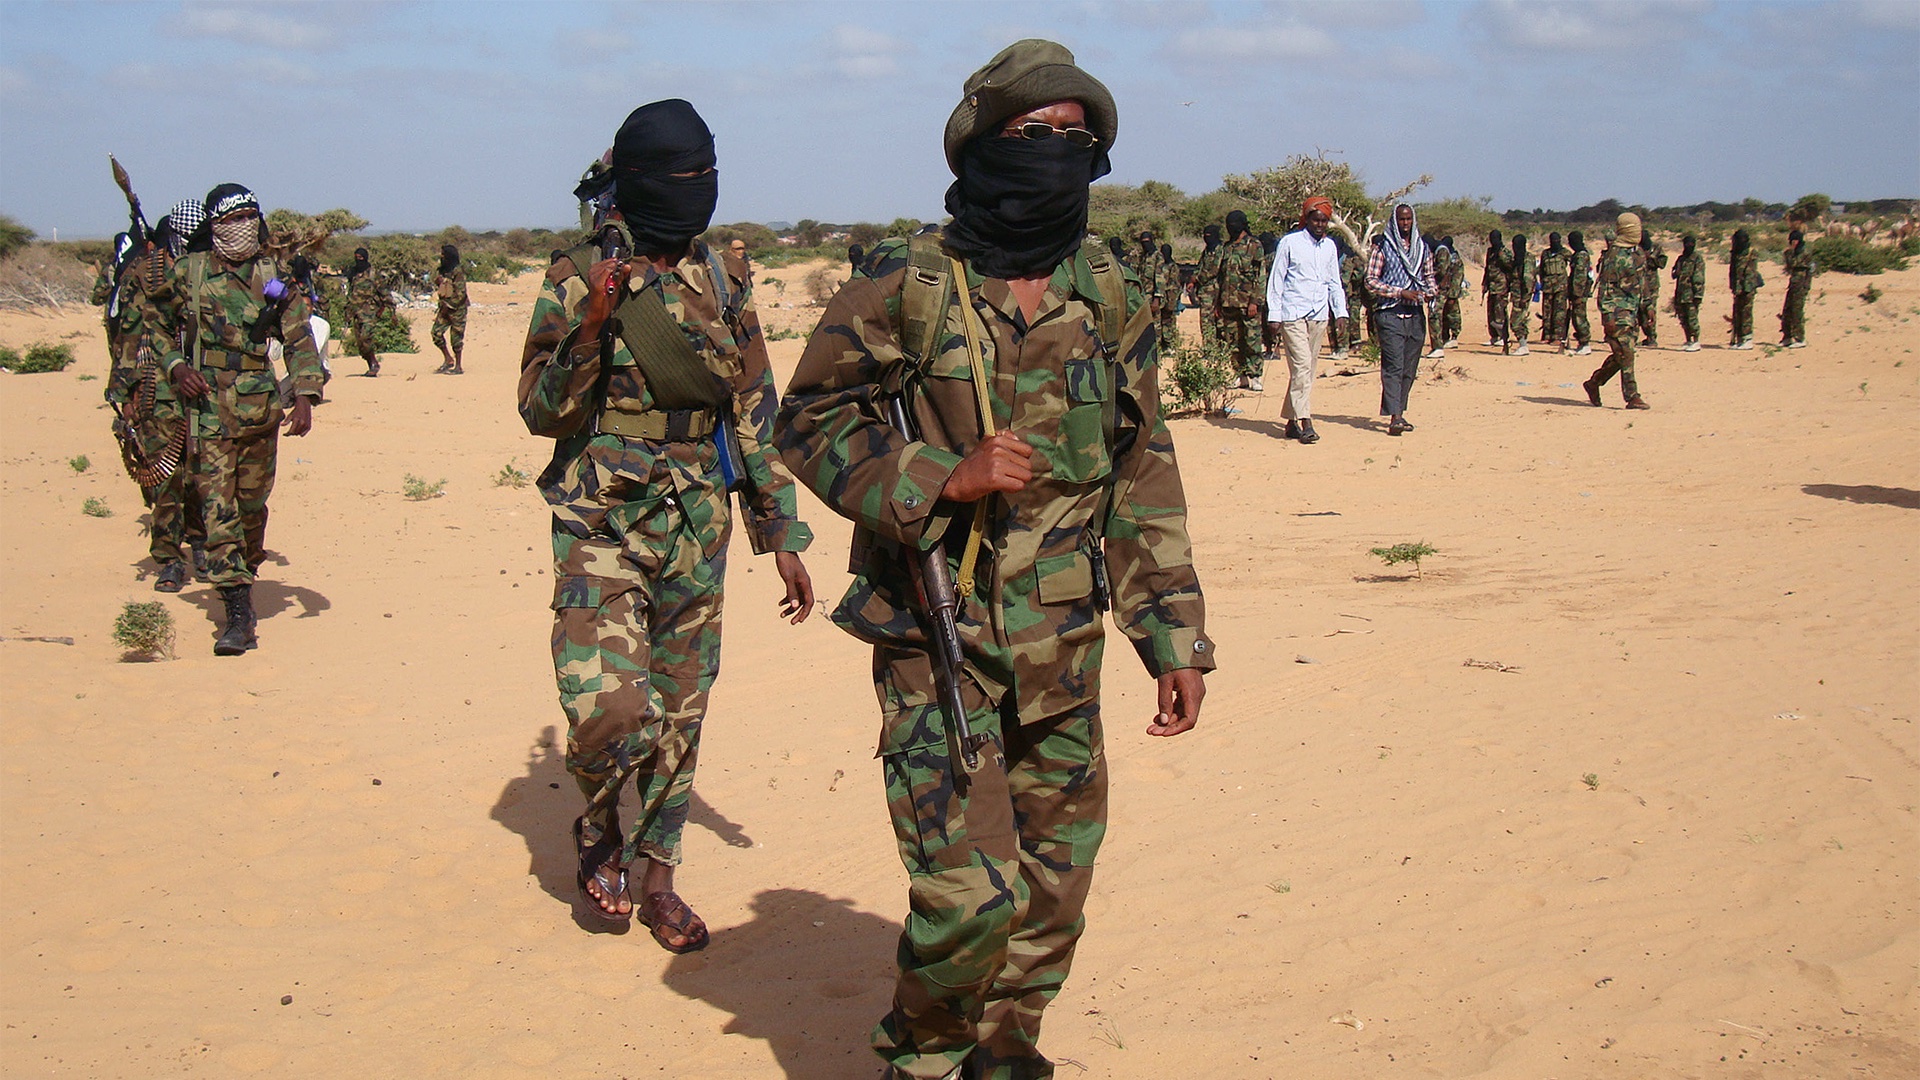 Al-Shabaab has lost a third of its territory in Somalia, US ambassador says